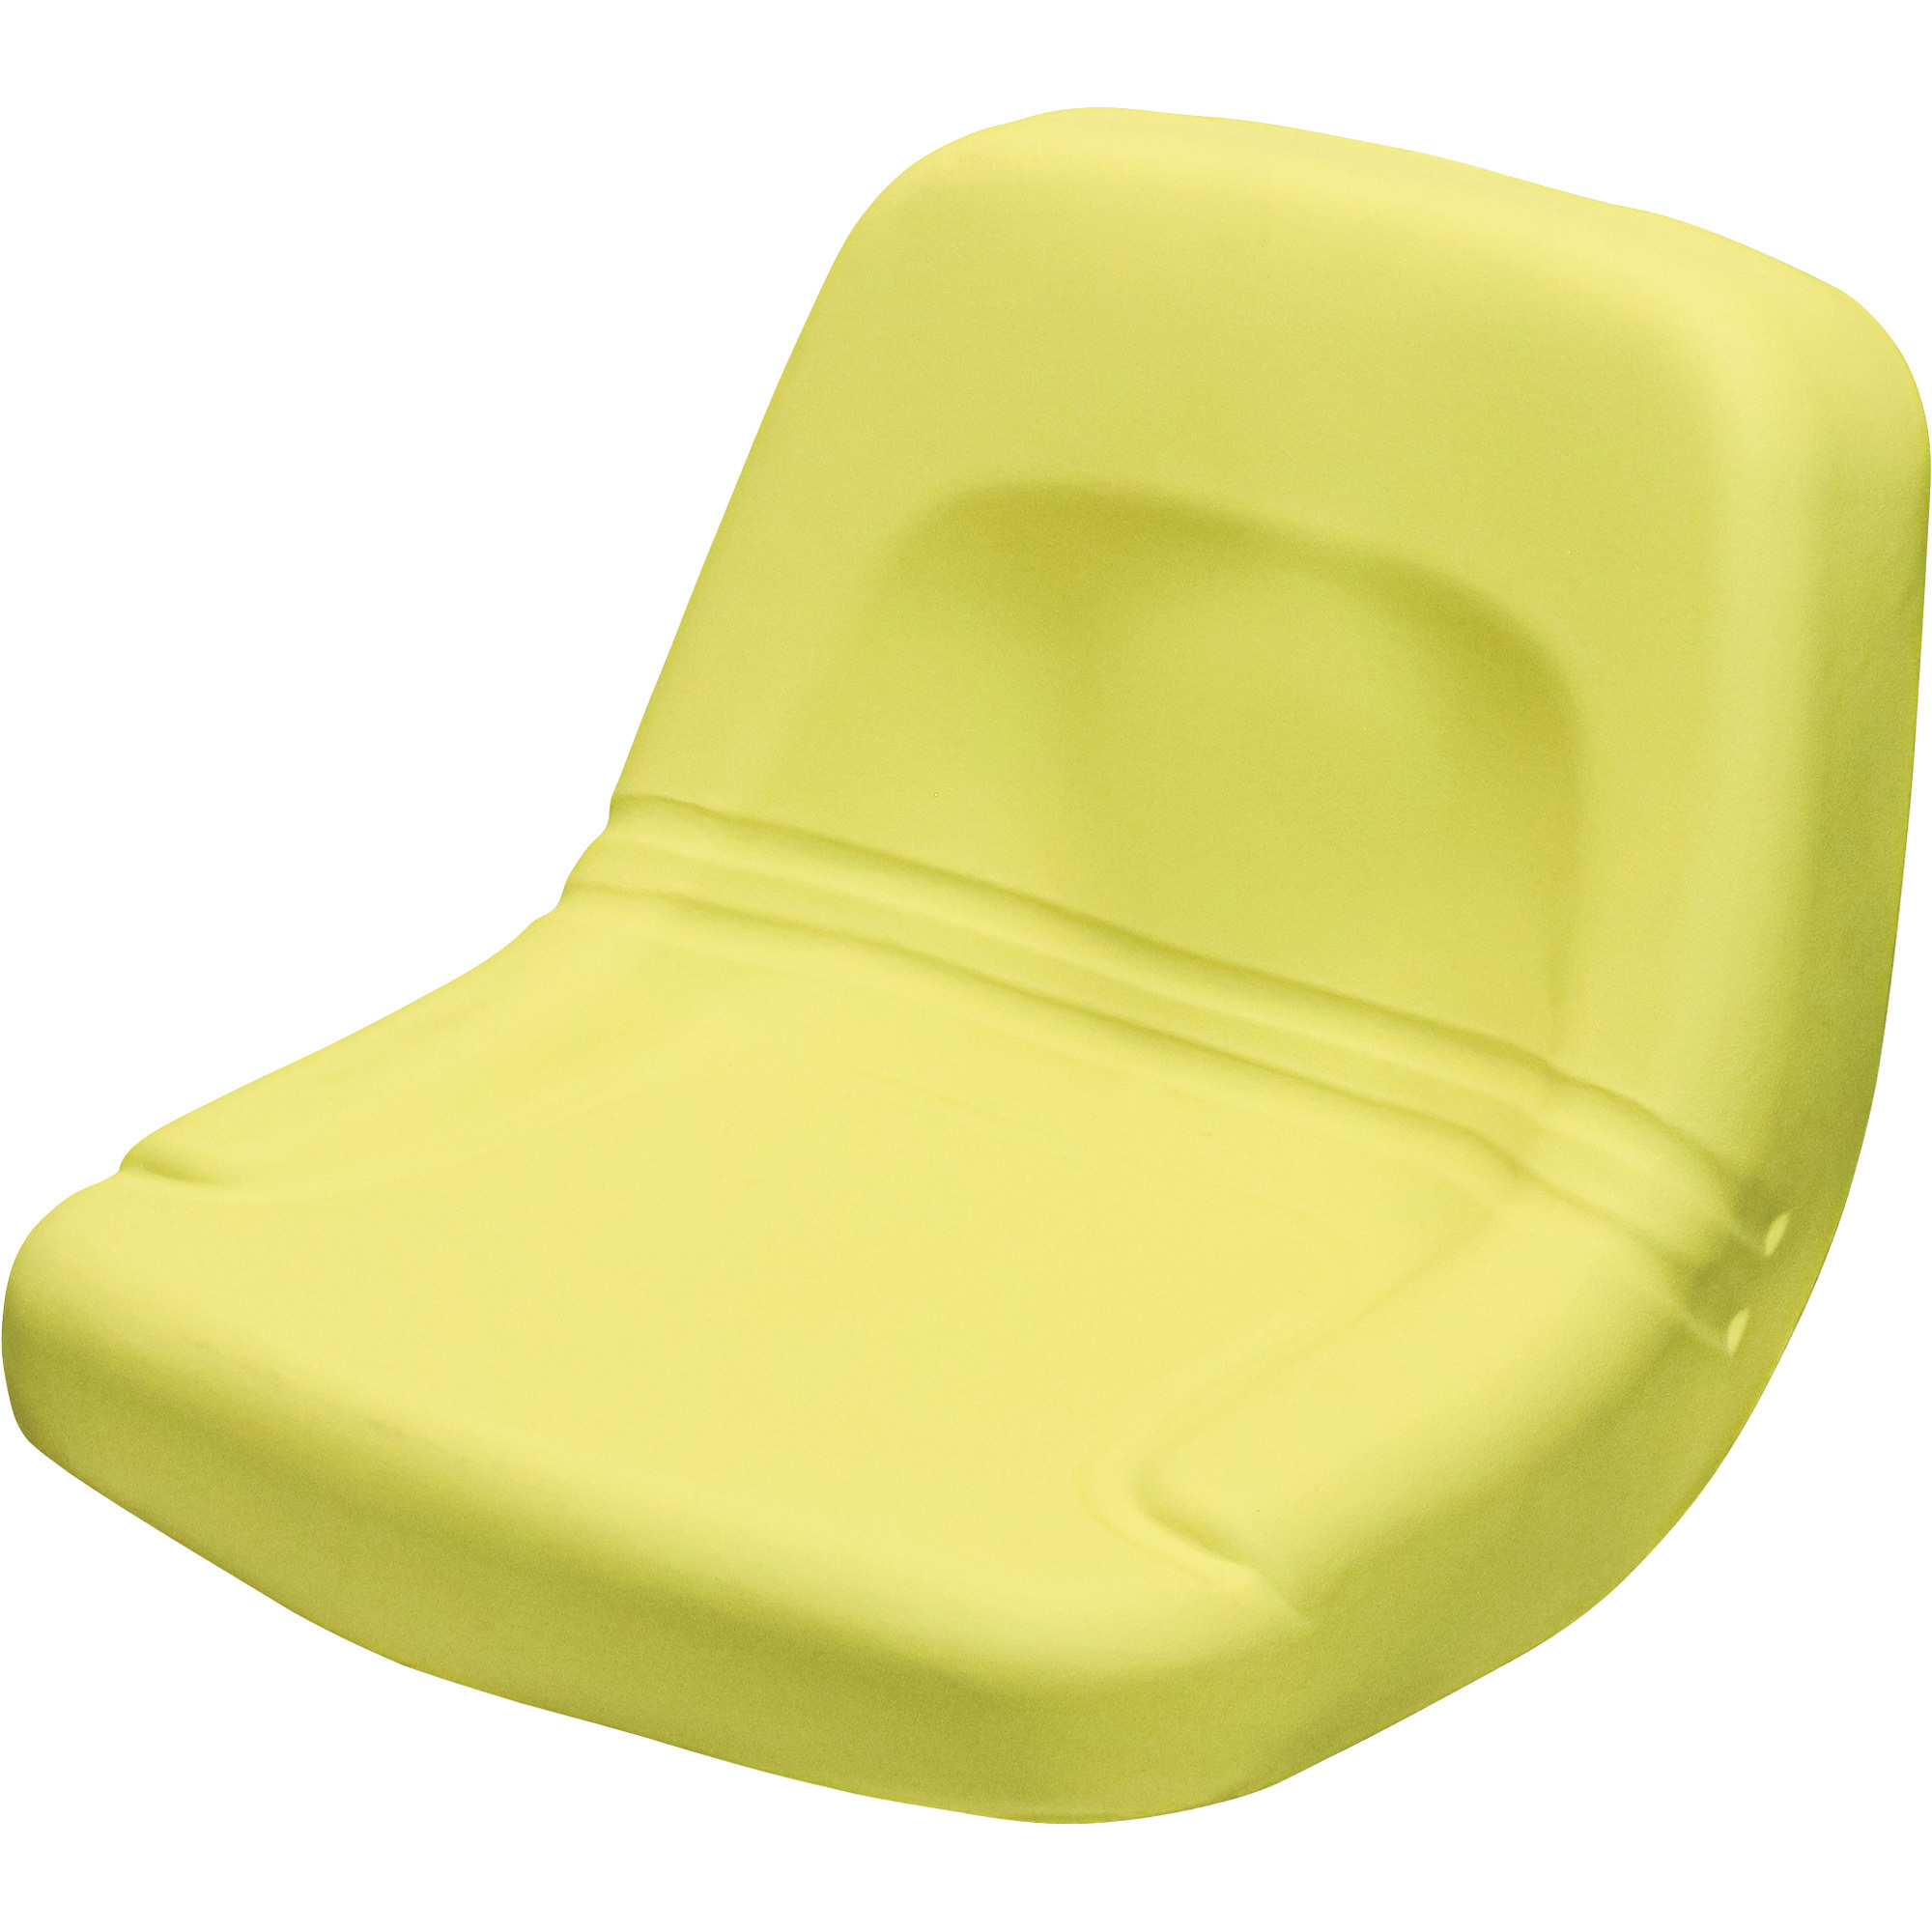 K & M Uni Pro KM 105 Bucket Seat, Yellow, Vinyl, Model 8631